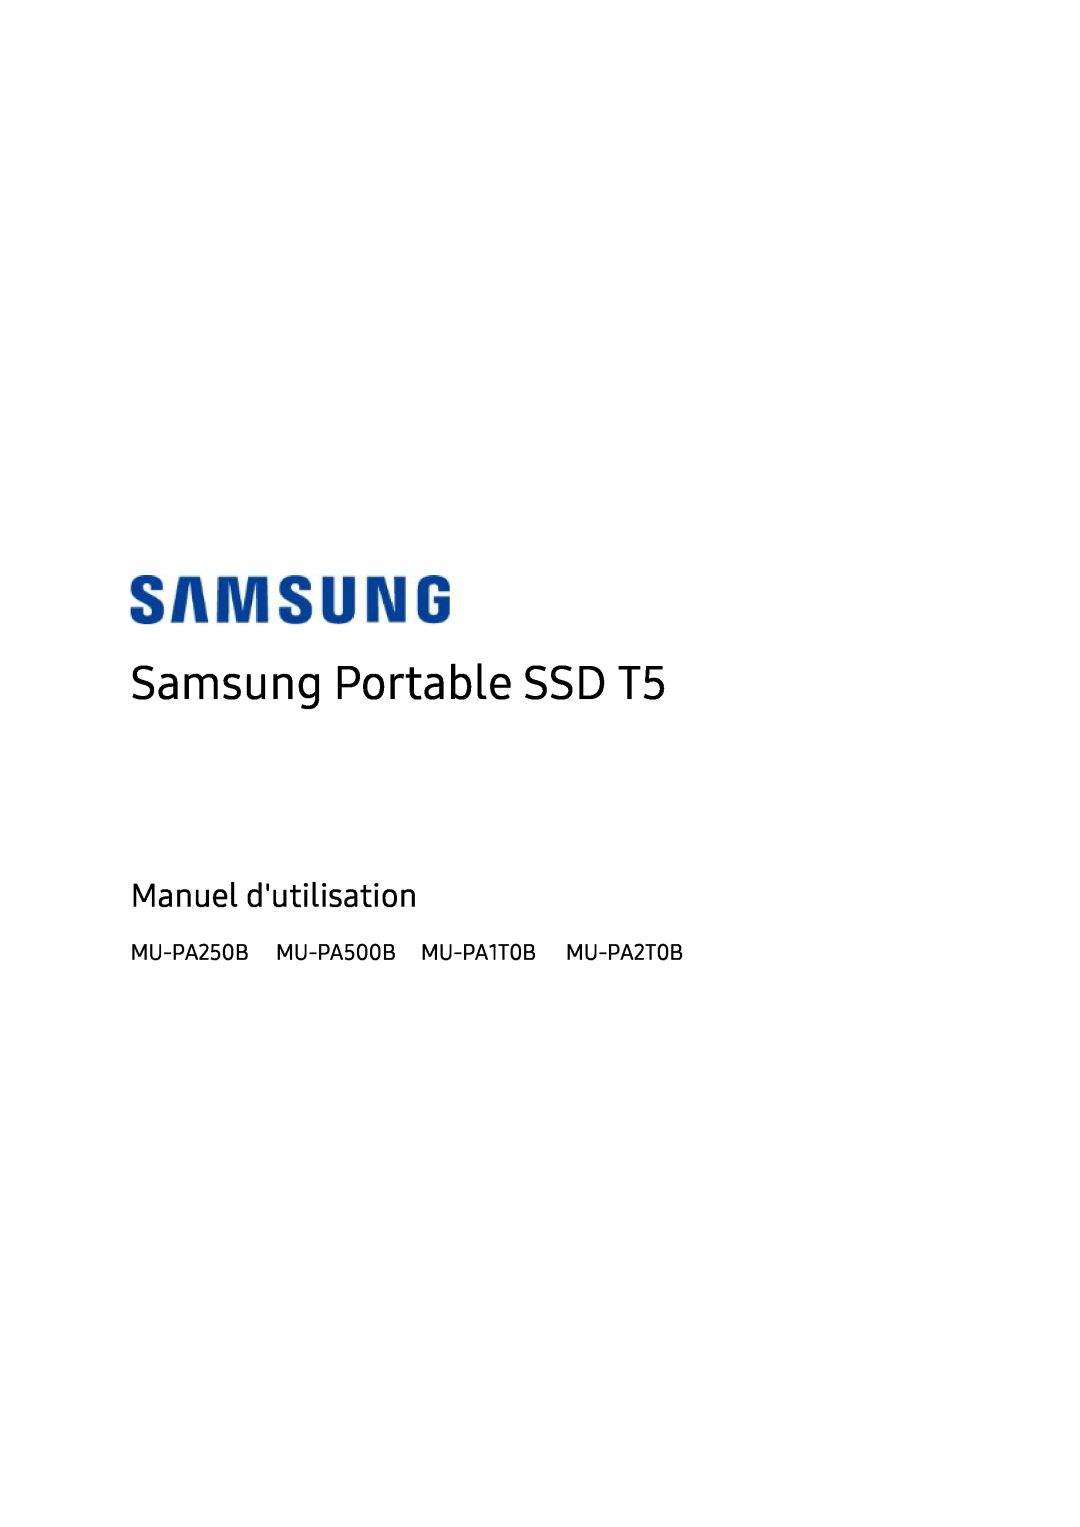 Samsung MU-PA250B/EU, MU-PA1T0B/EU, MU-PA500B/EU, MU-PA2T0B/EU manual Samsung Portable SSD T5, Manuel dutilisation 